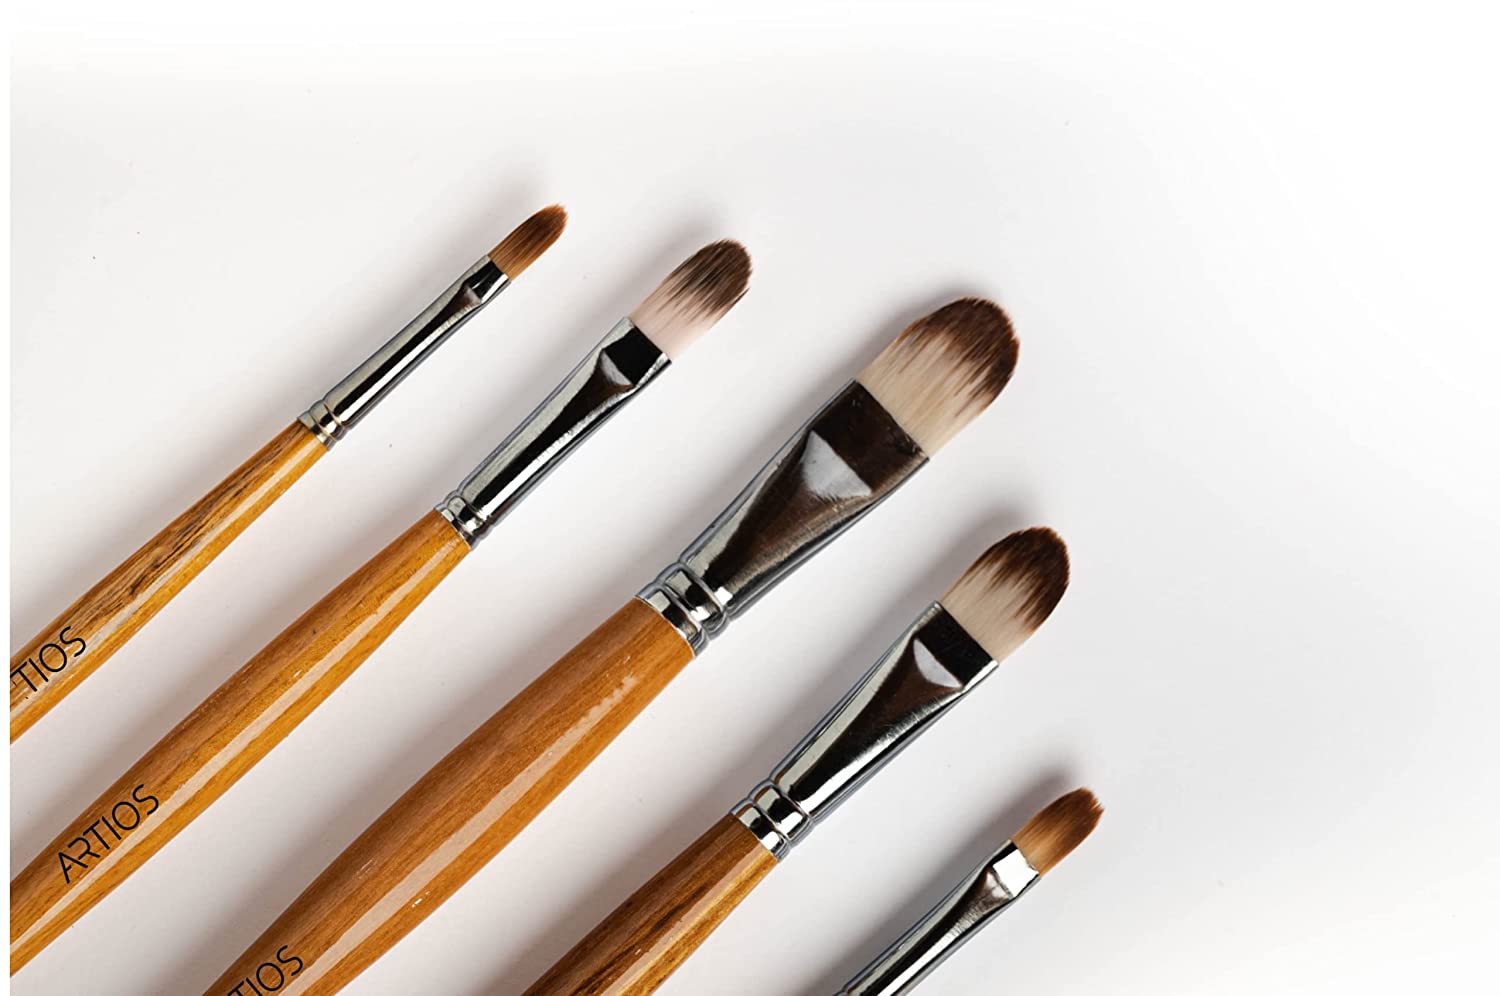 ARTIOS Mop Brush for Painting - Premium Watercolor Brush Set  with Brush Holder 